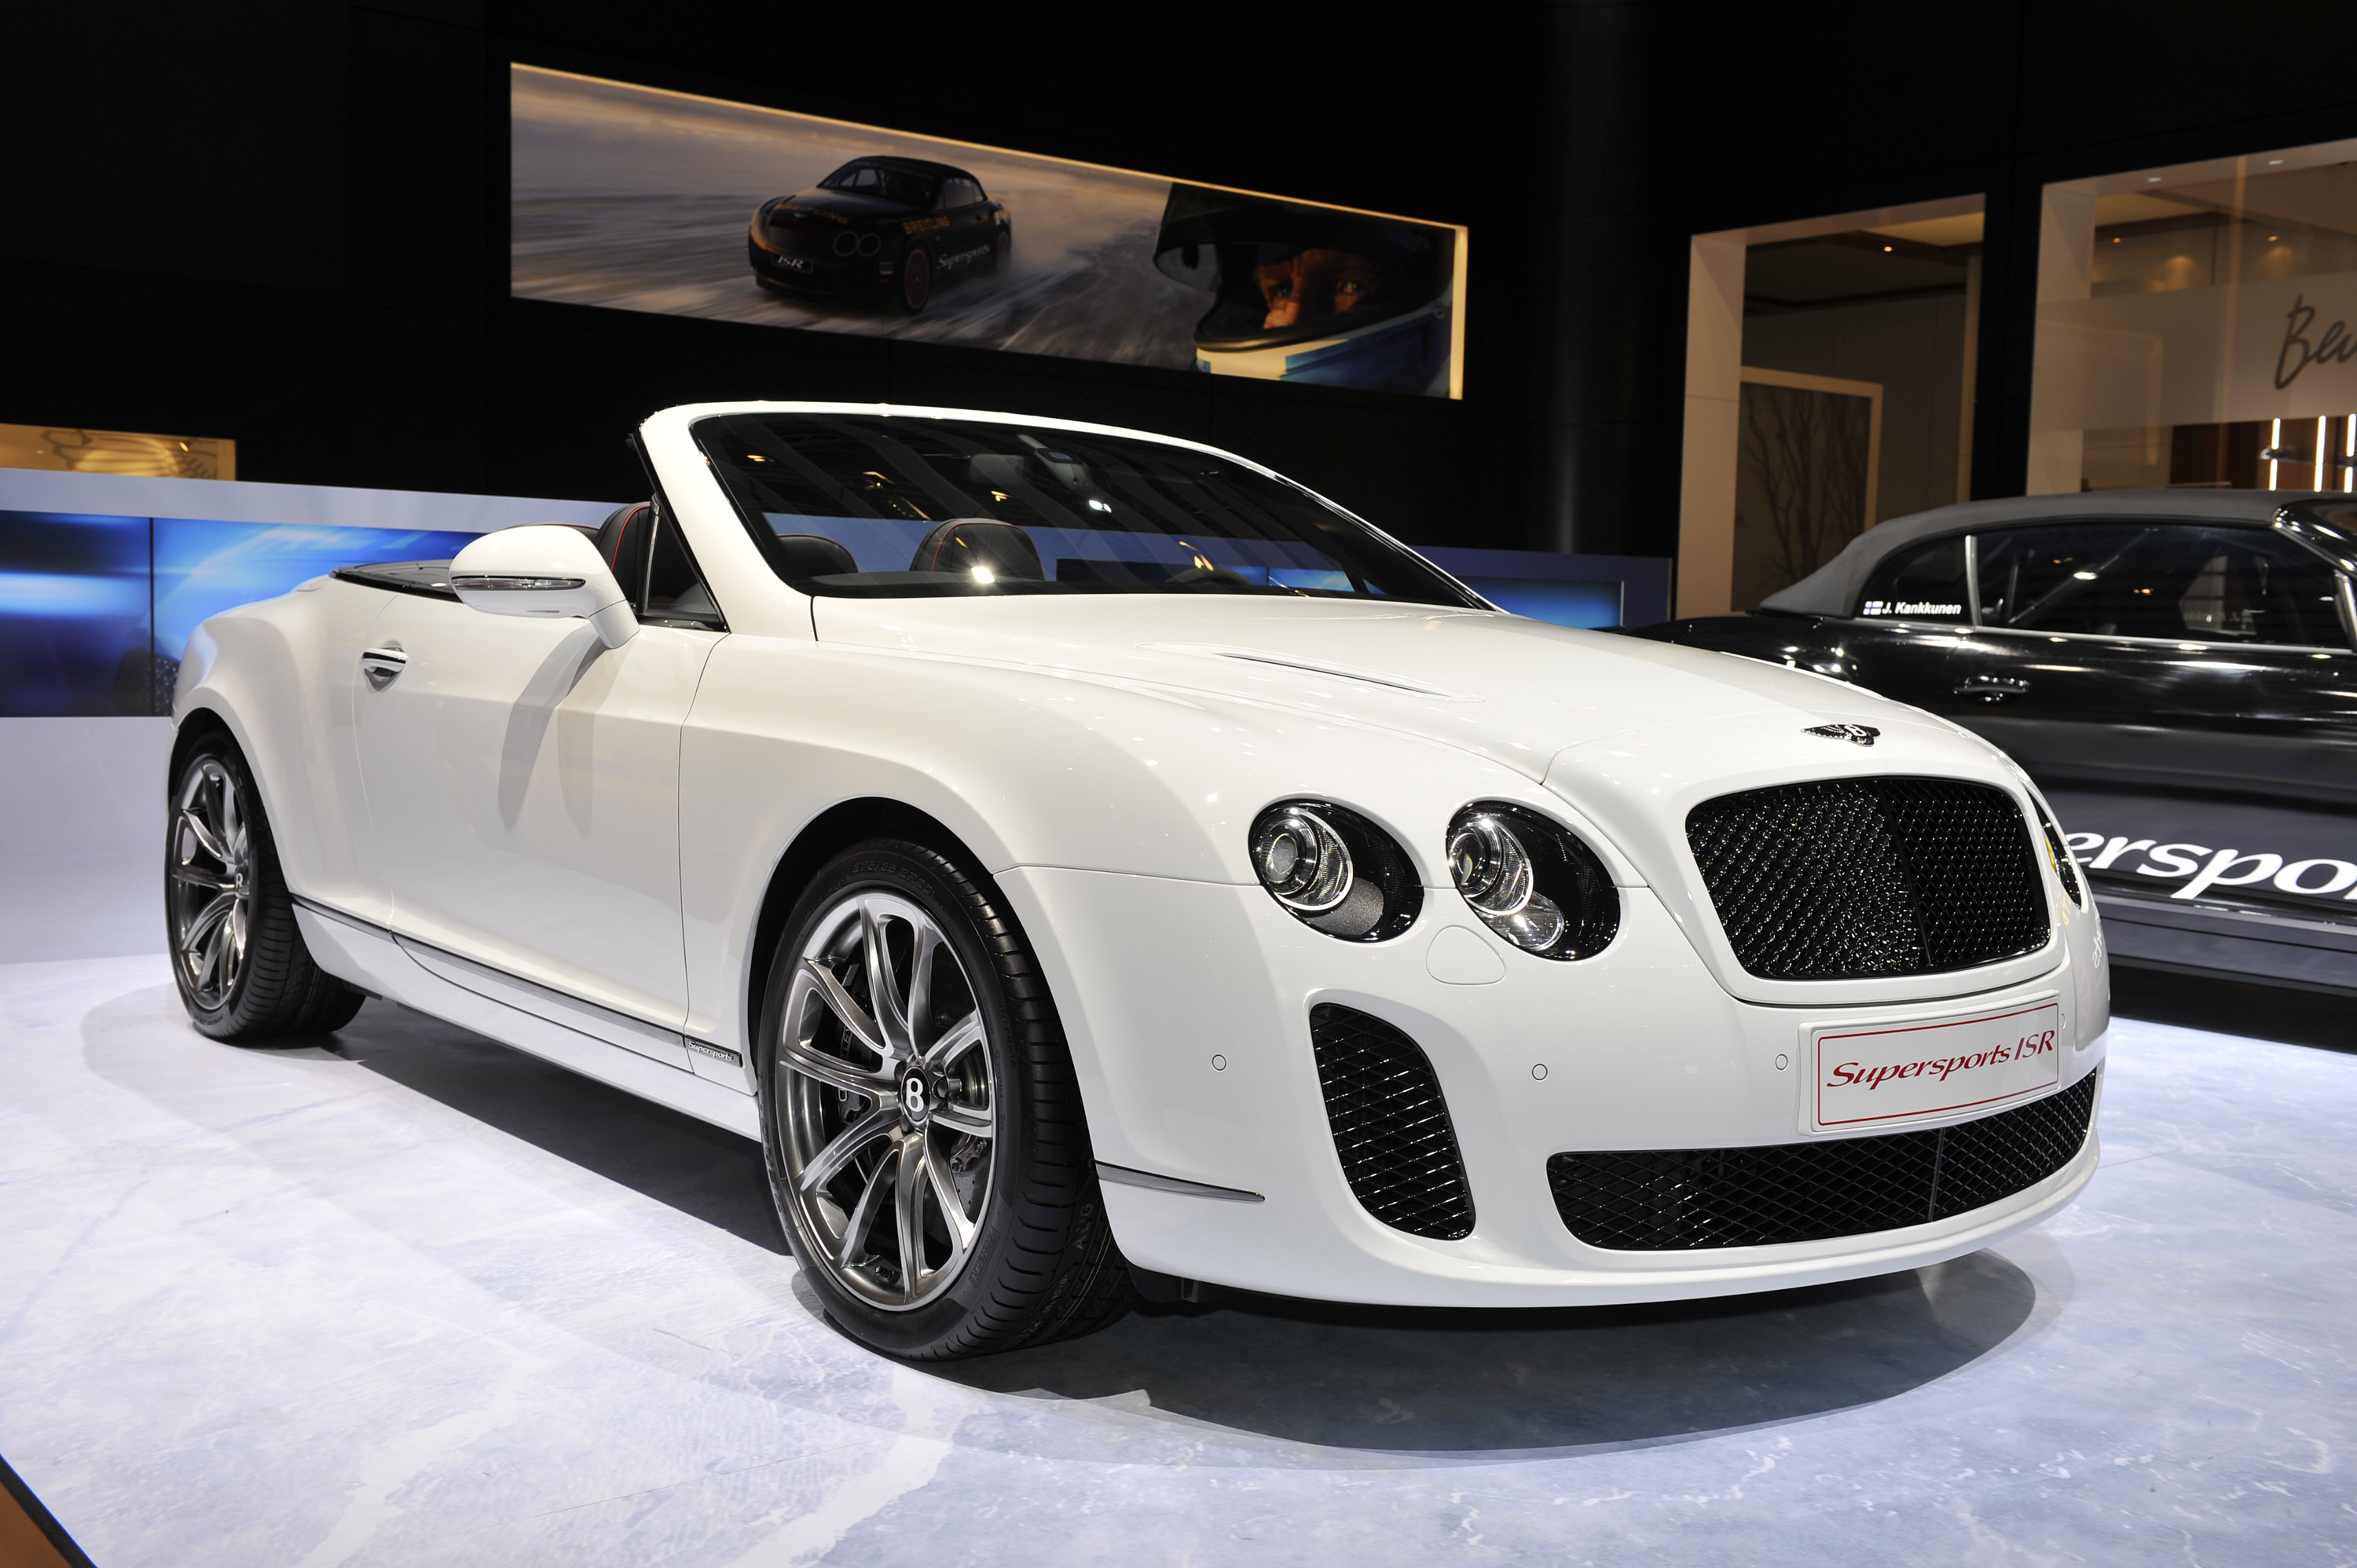 Bentley Continental Supersports ISR Convertible Geneva